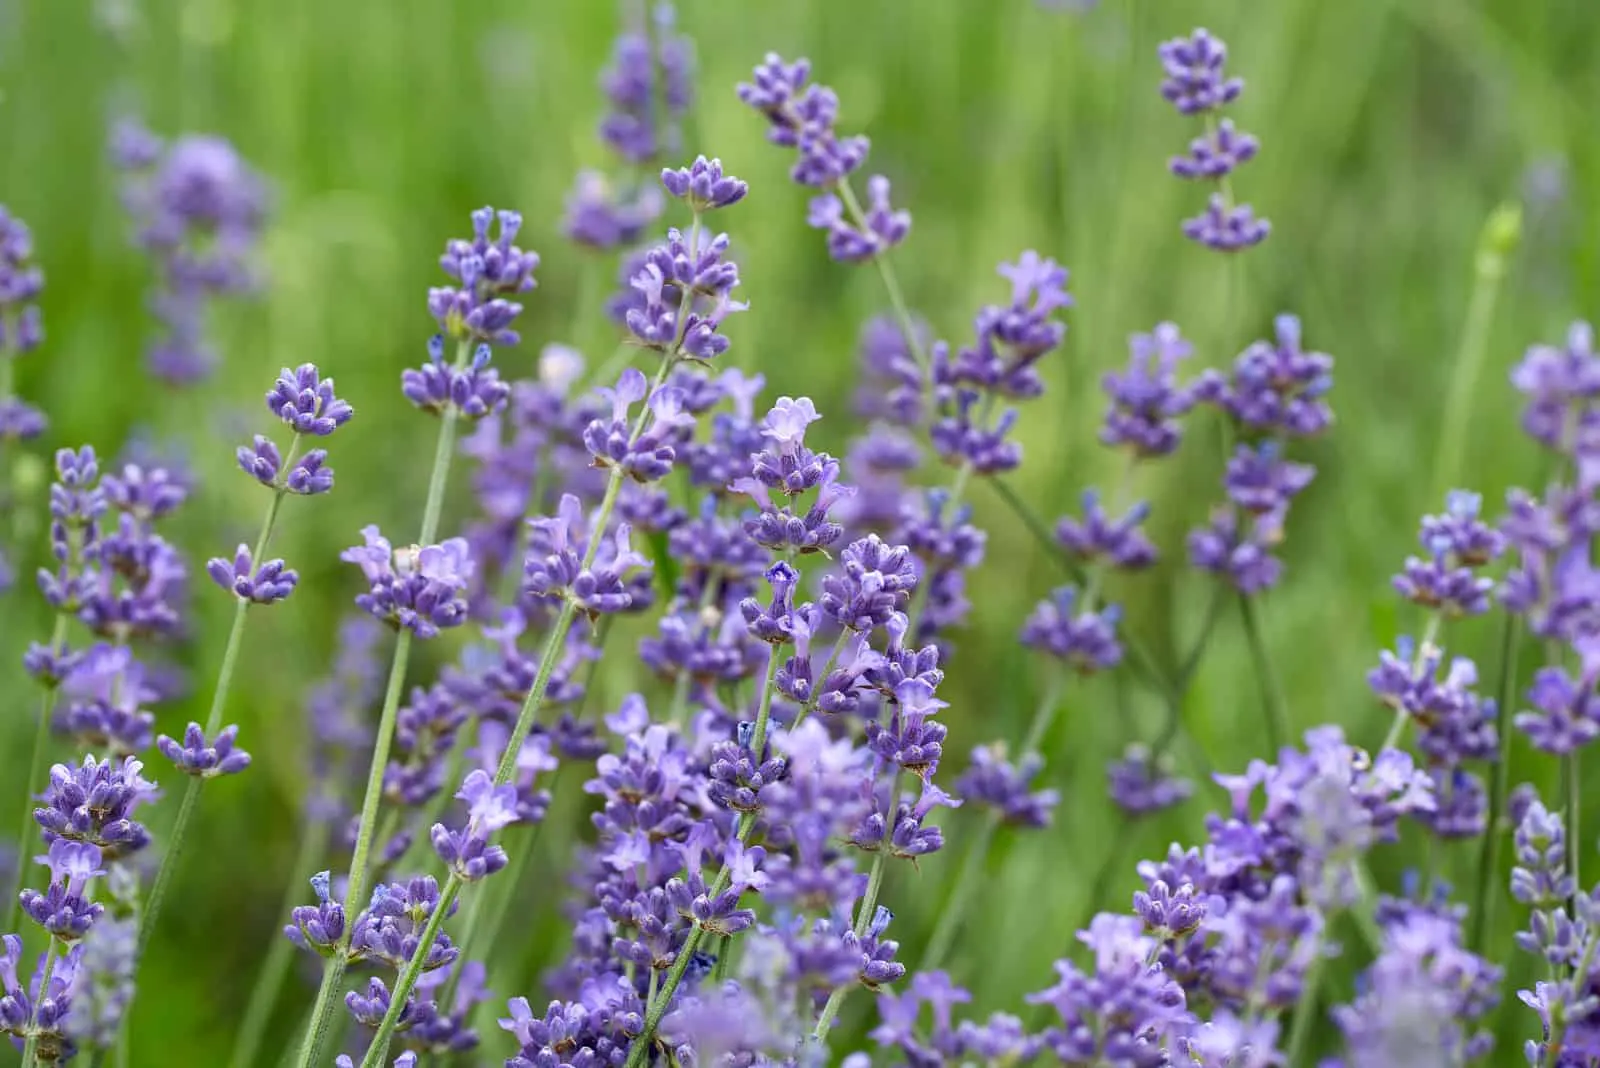 beautiful lavender flowers